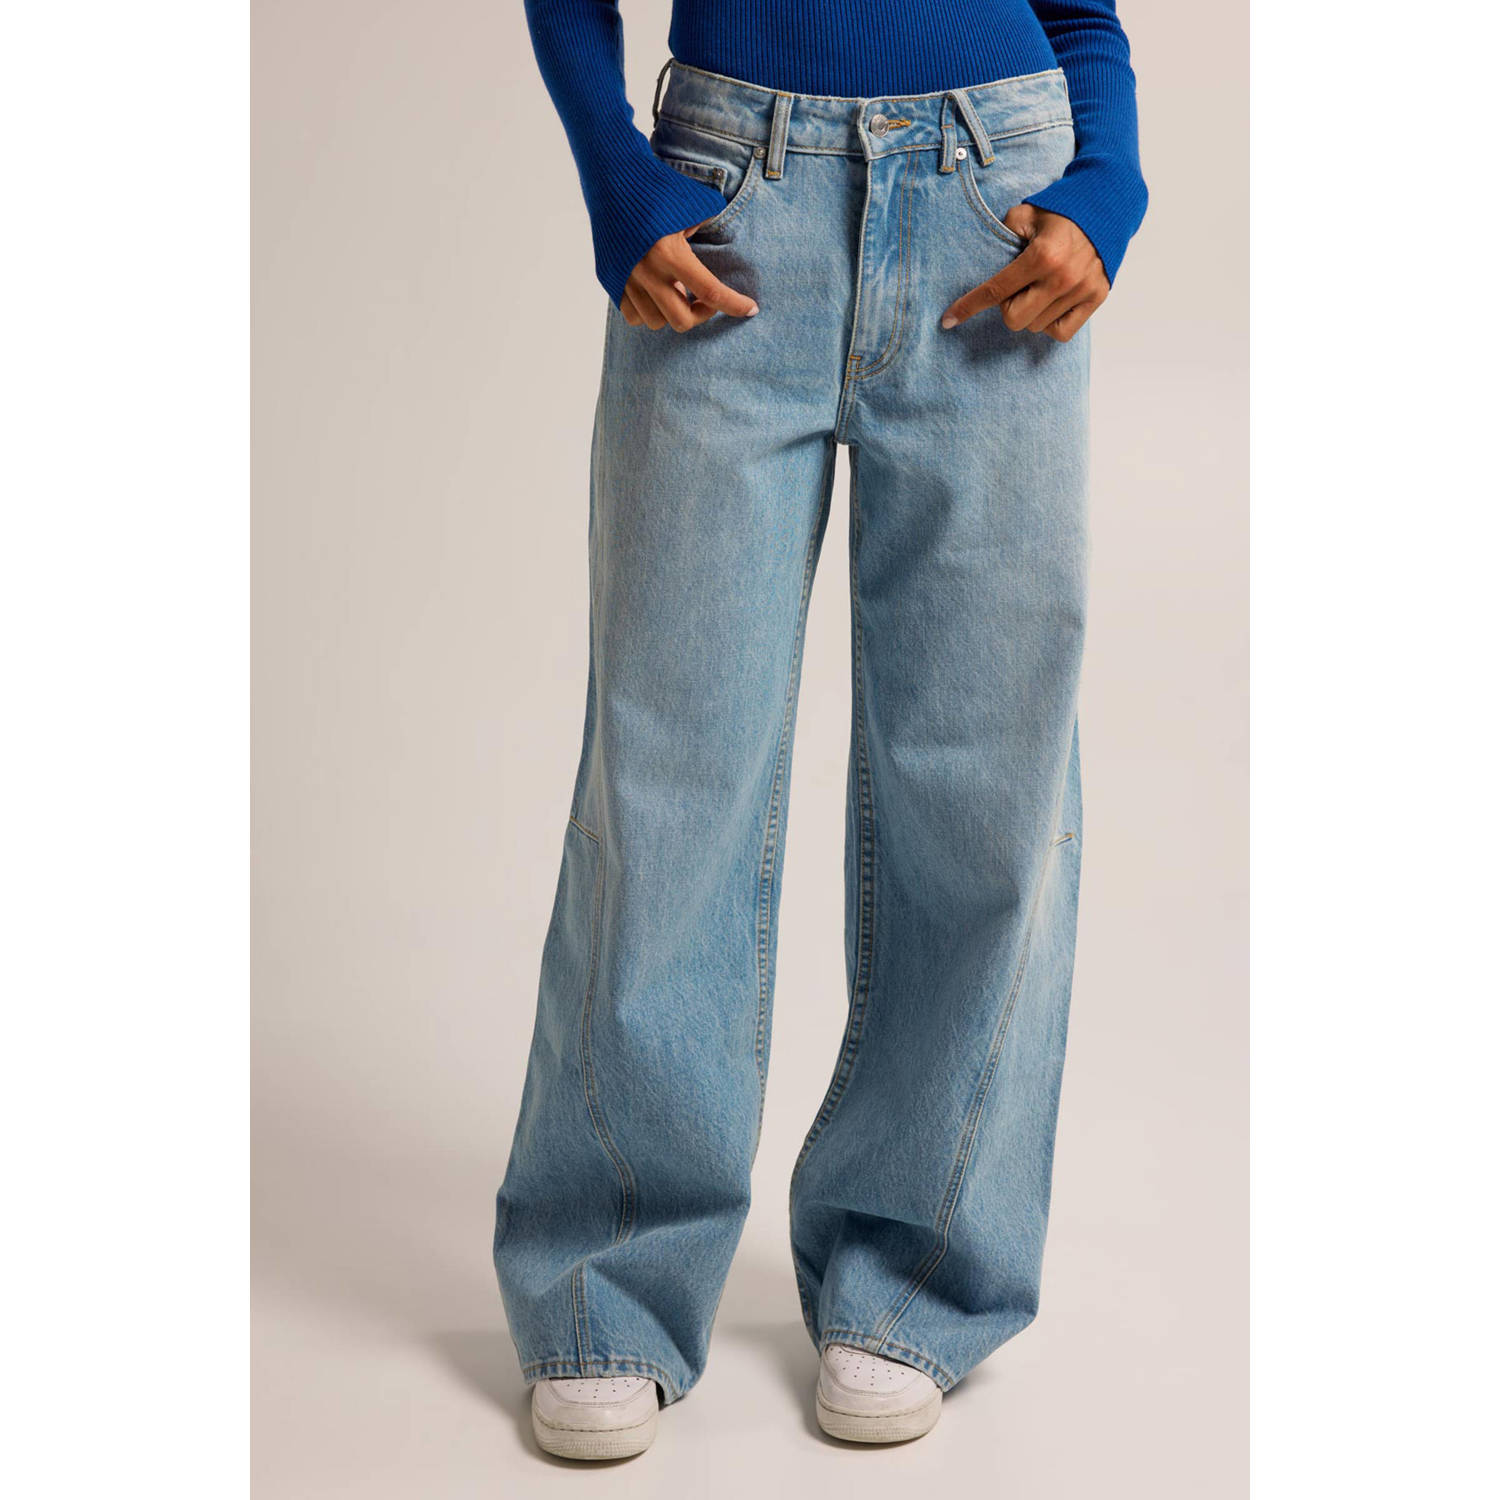 America Today wide leg jeans light blue denim